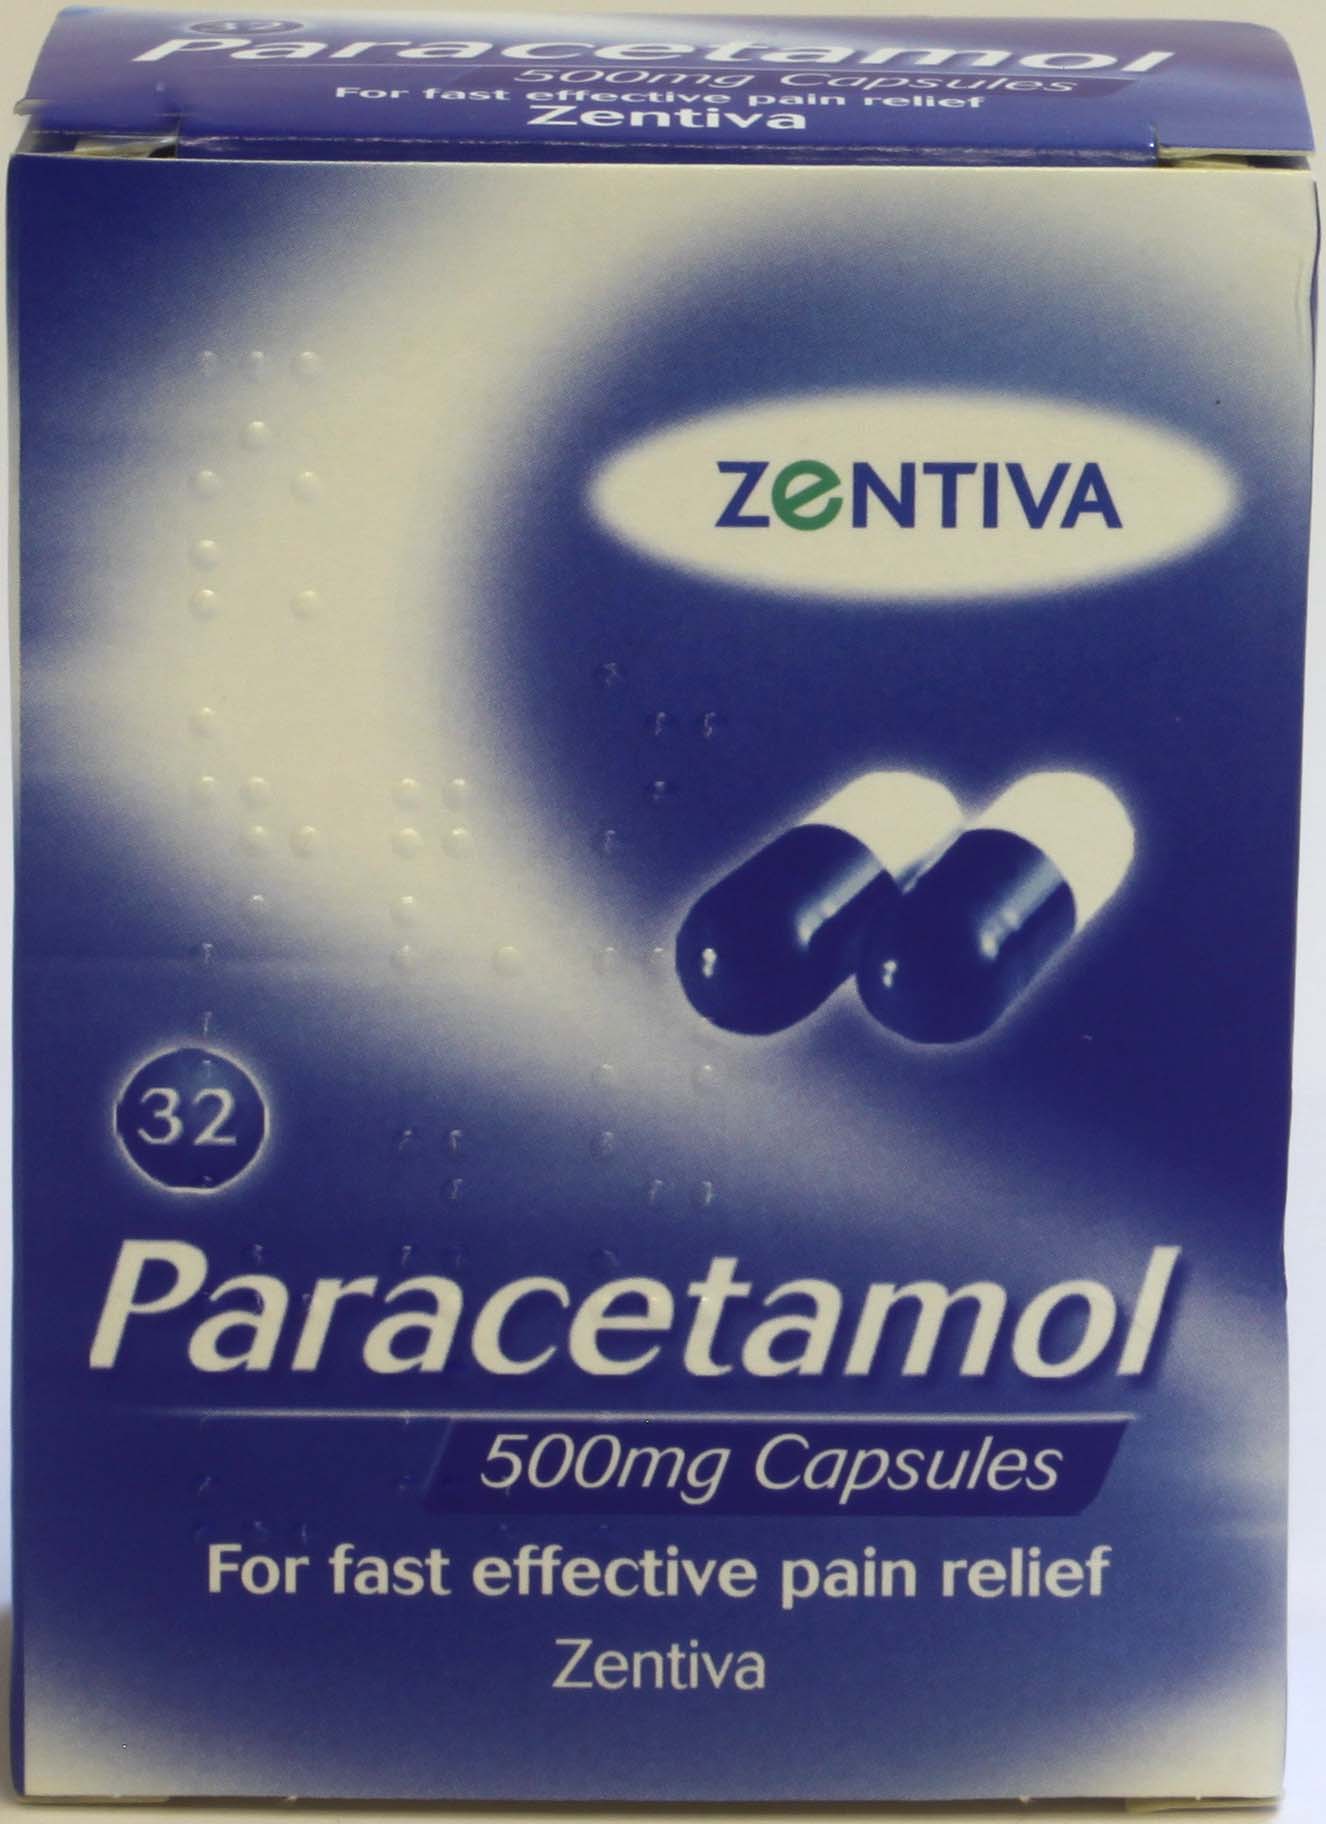 Zentiva Paracetamol 500mg Capsules - 32